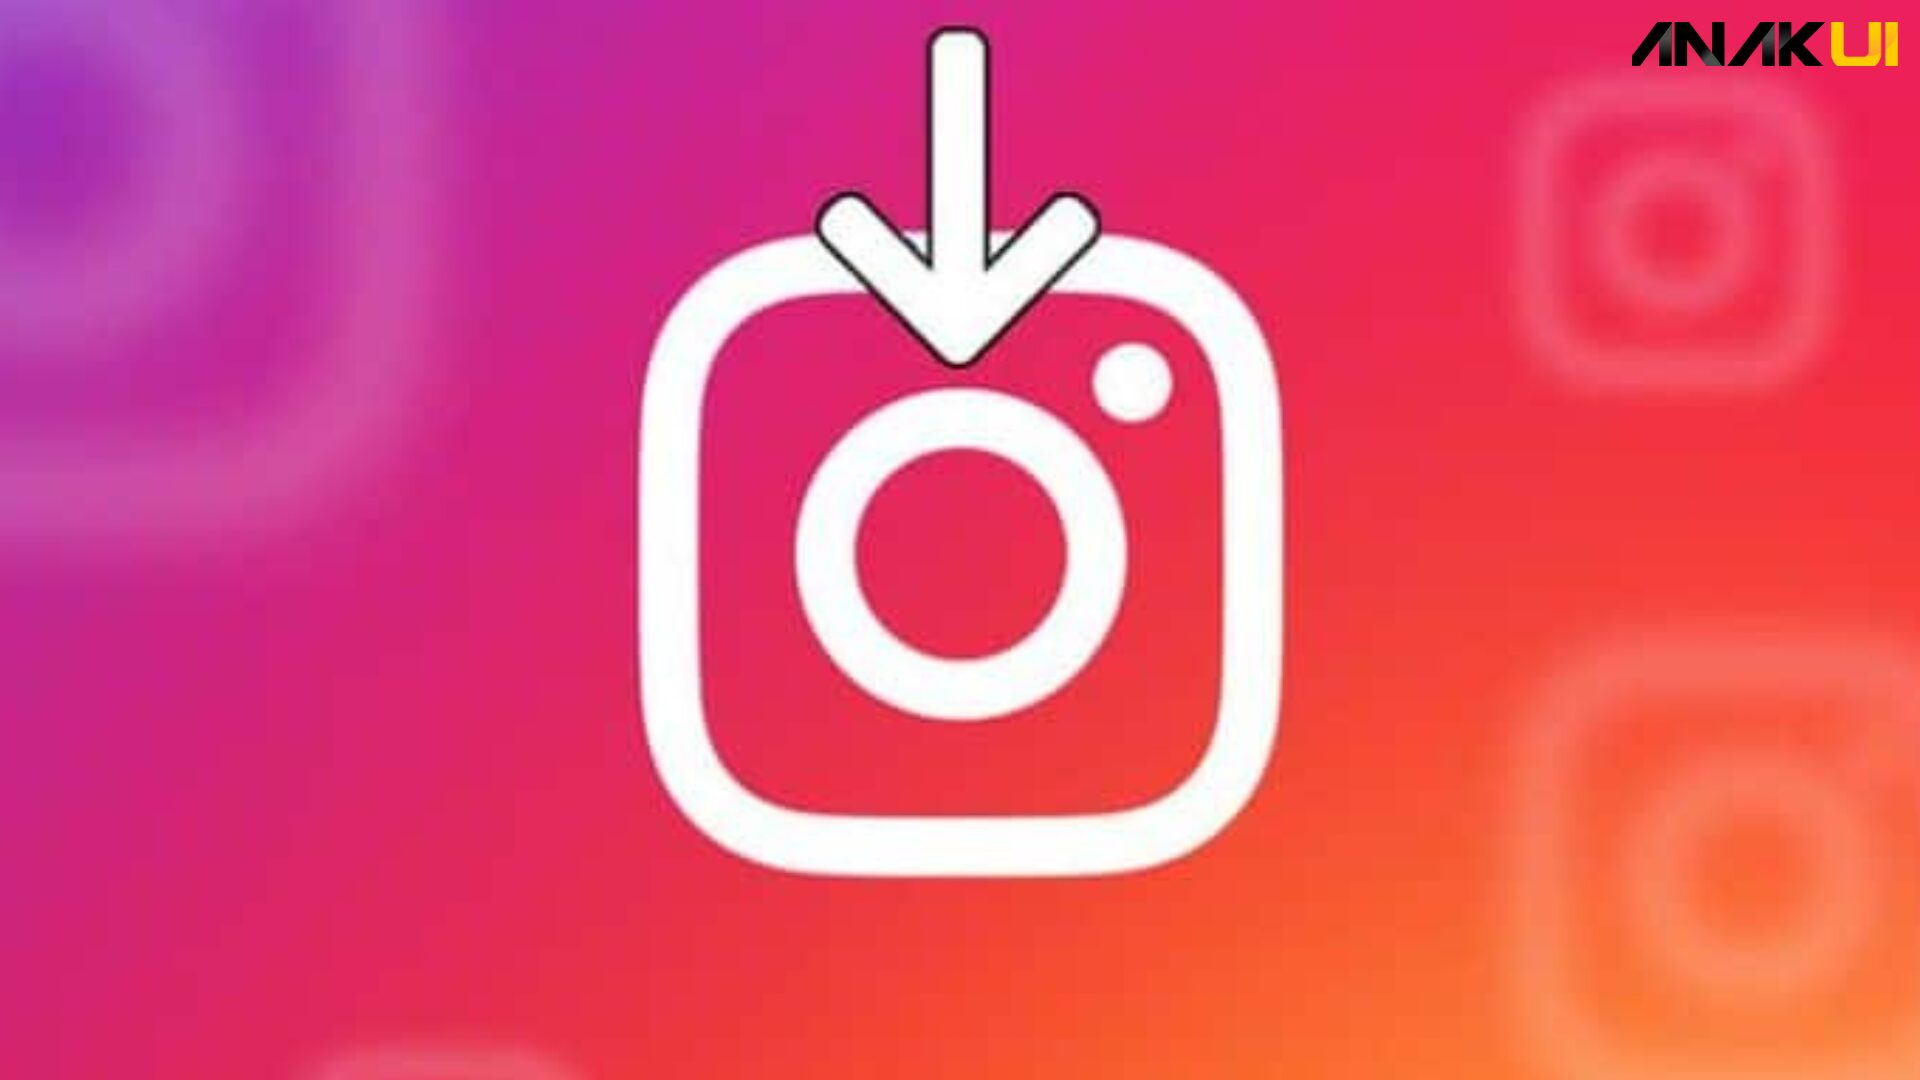 Download Video Instagram Tanpa Watermark